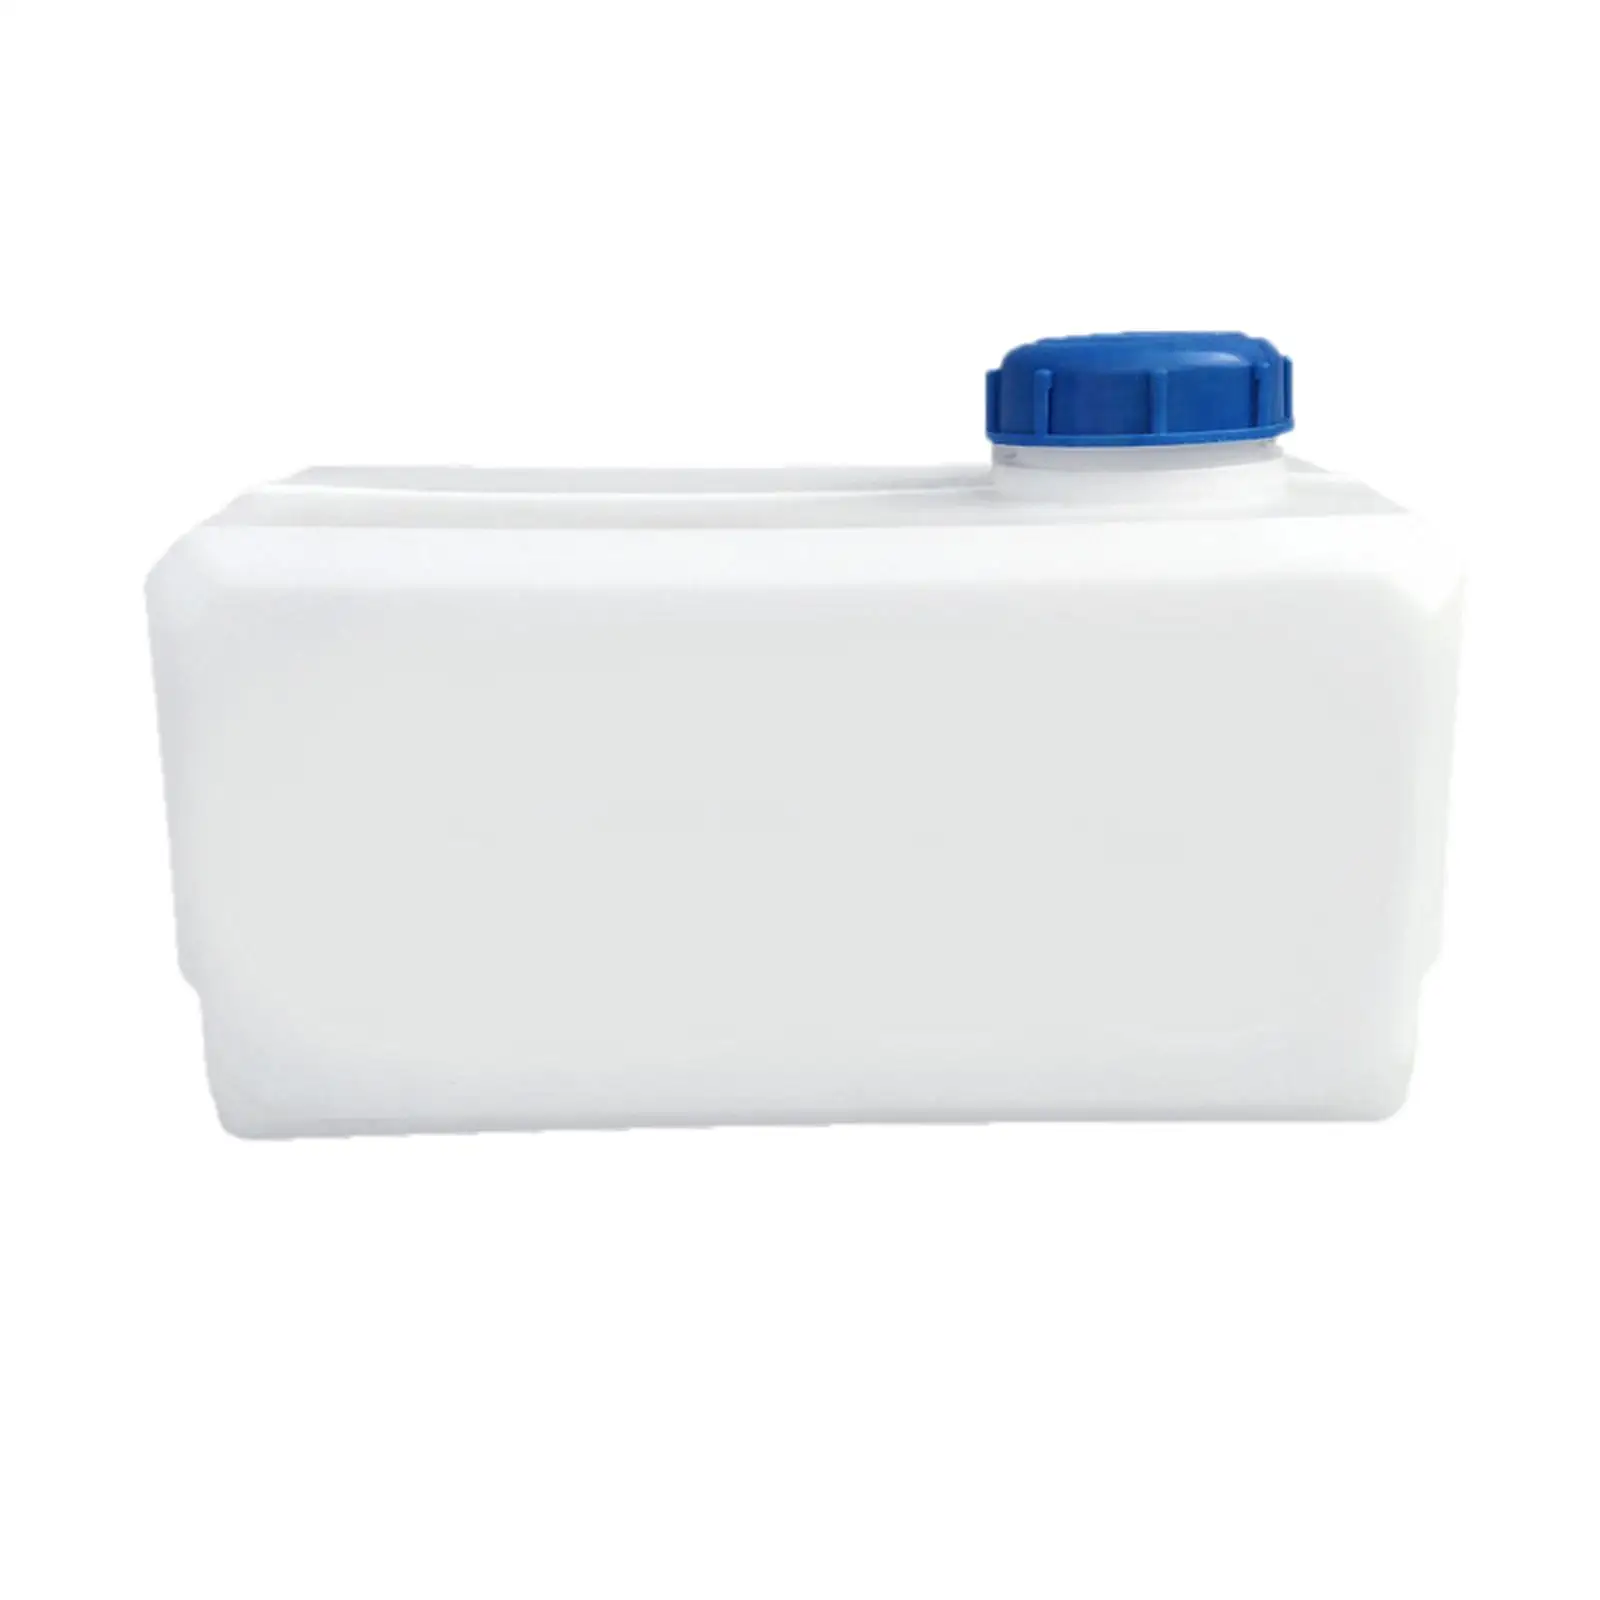 1PC 5L Plastic Fuel Tank Fuel Oil Gasoline Storage Box Durable for Car